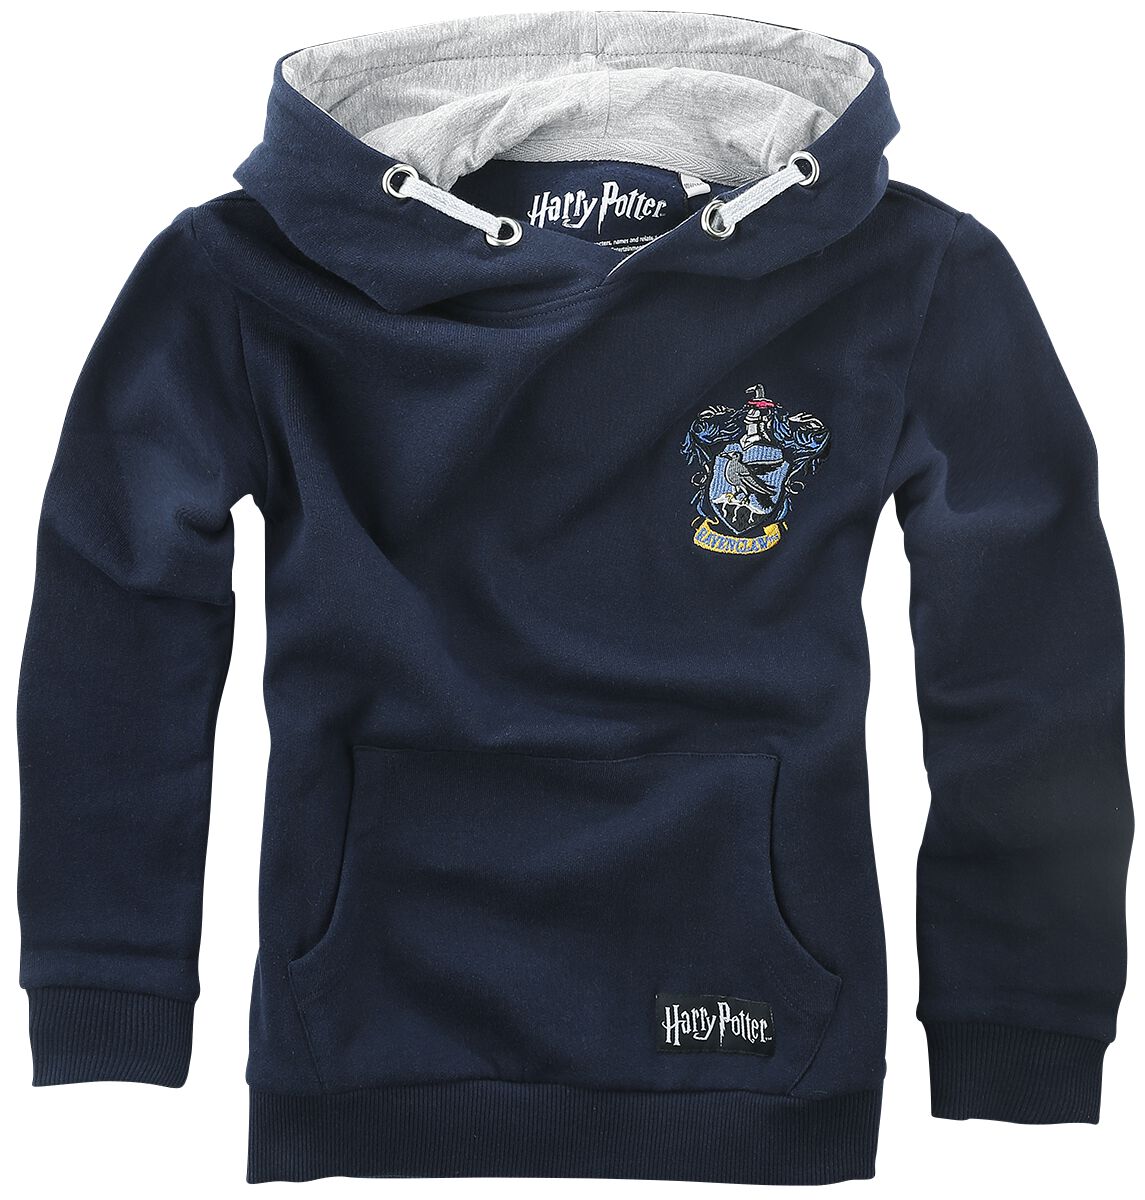 Harry Potter Kapuzenpullover - Kids - Ravenclaw - 116 bis 140 - Größe 128 - navy  - EMP exklusives Merchandise!